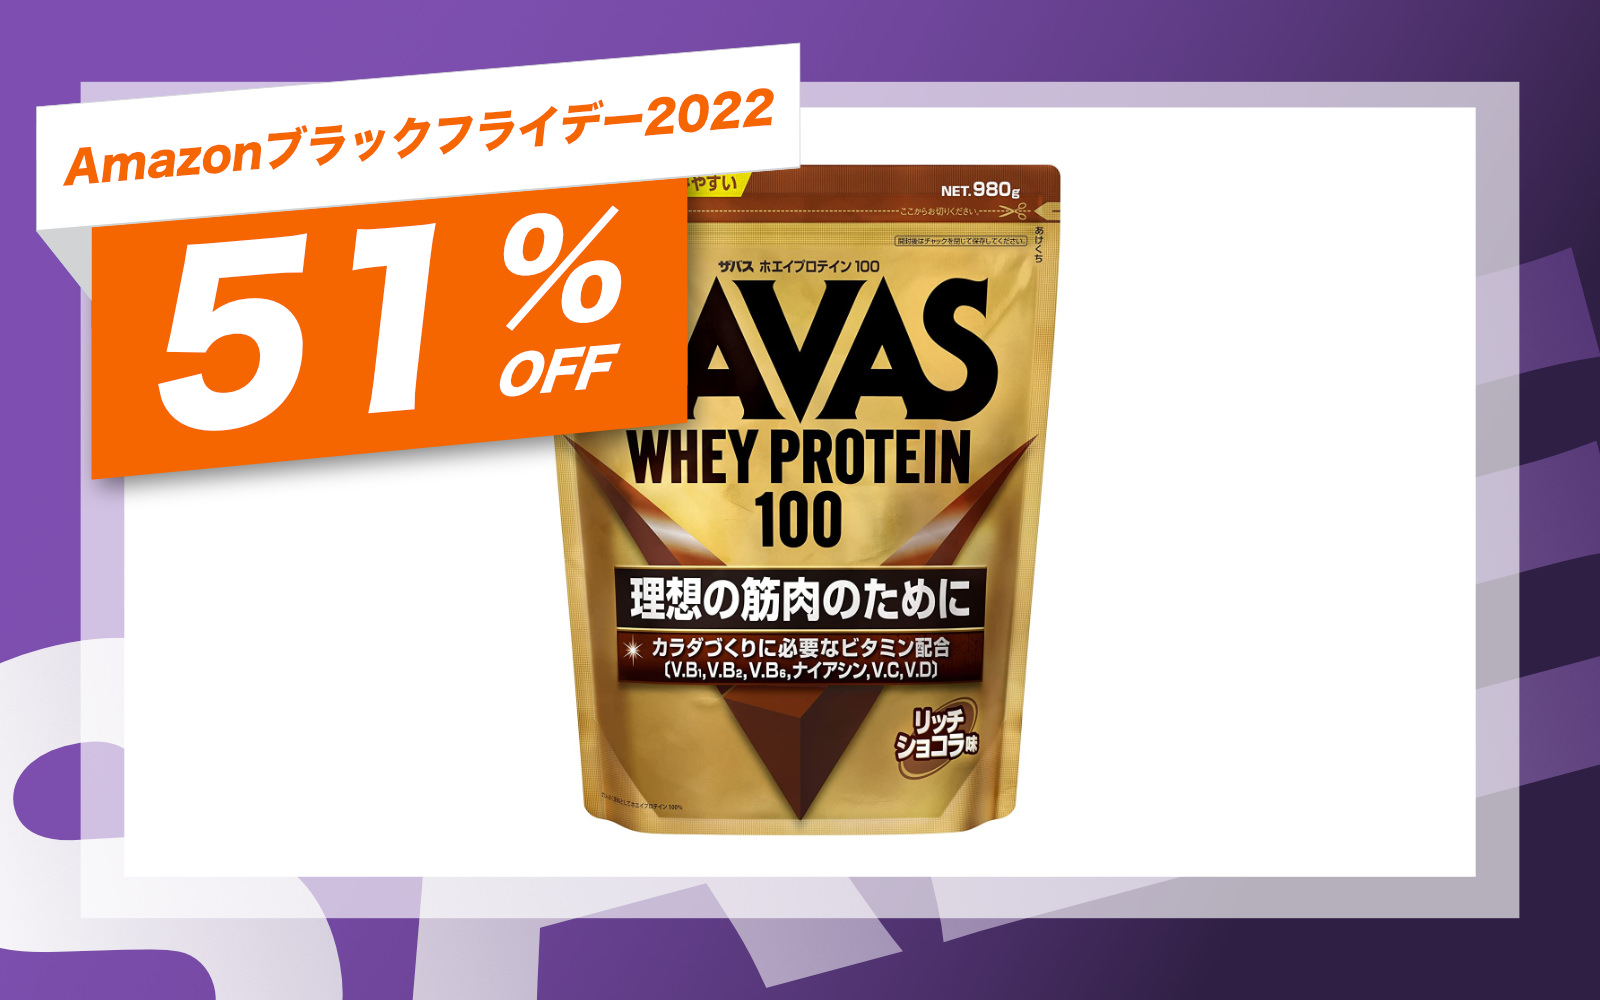 SAVAS Protein Amazon Black Friday Sale 2022